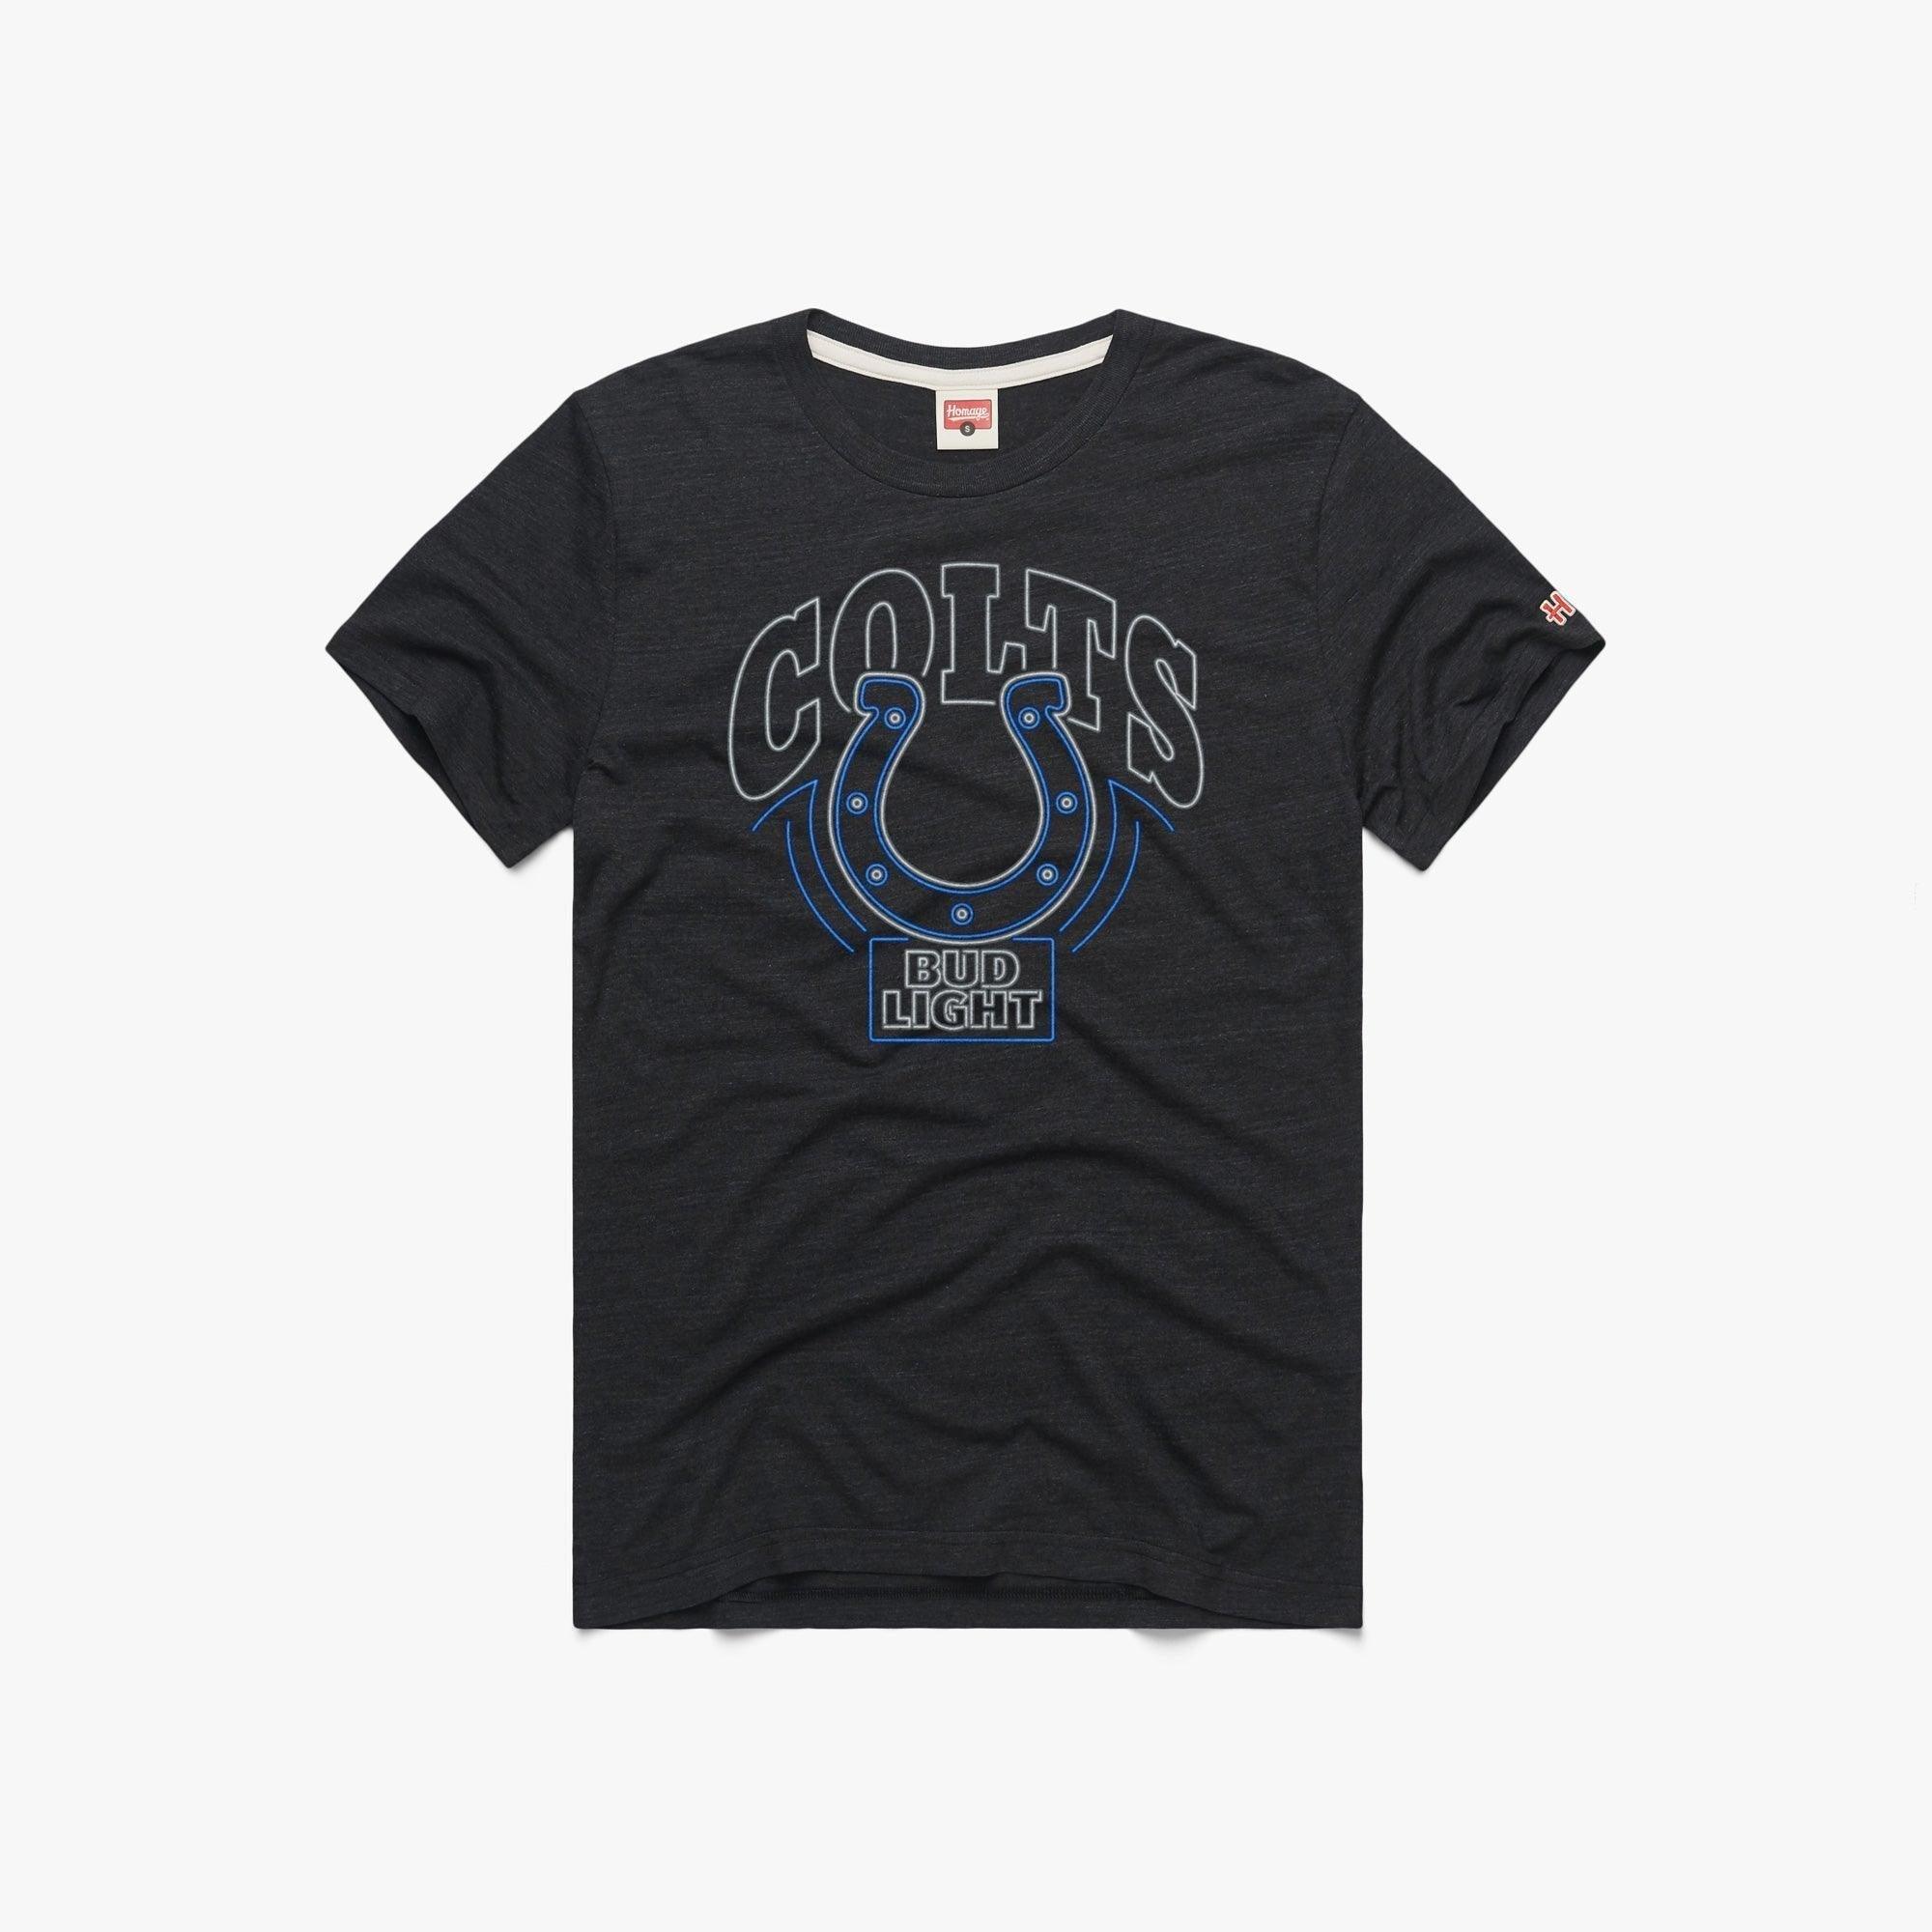 Indianapolis Colts Bud Light Black T-Shirt